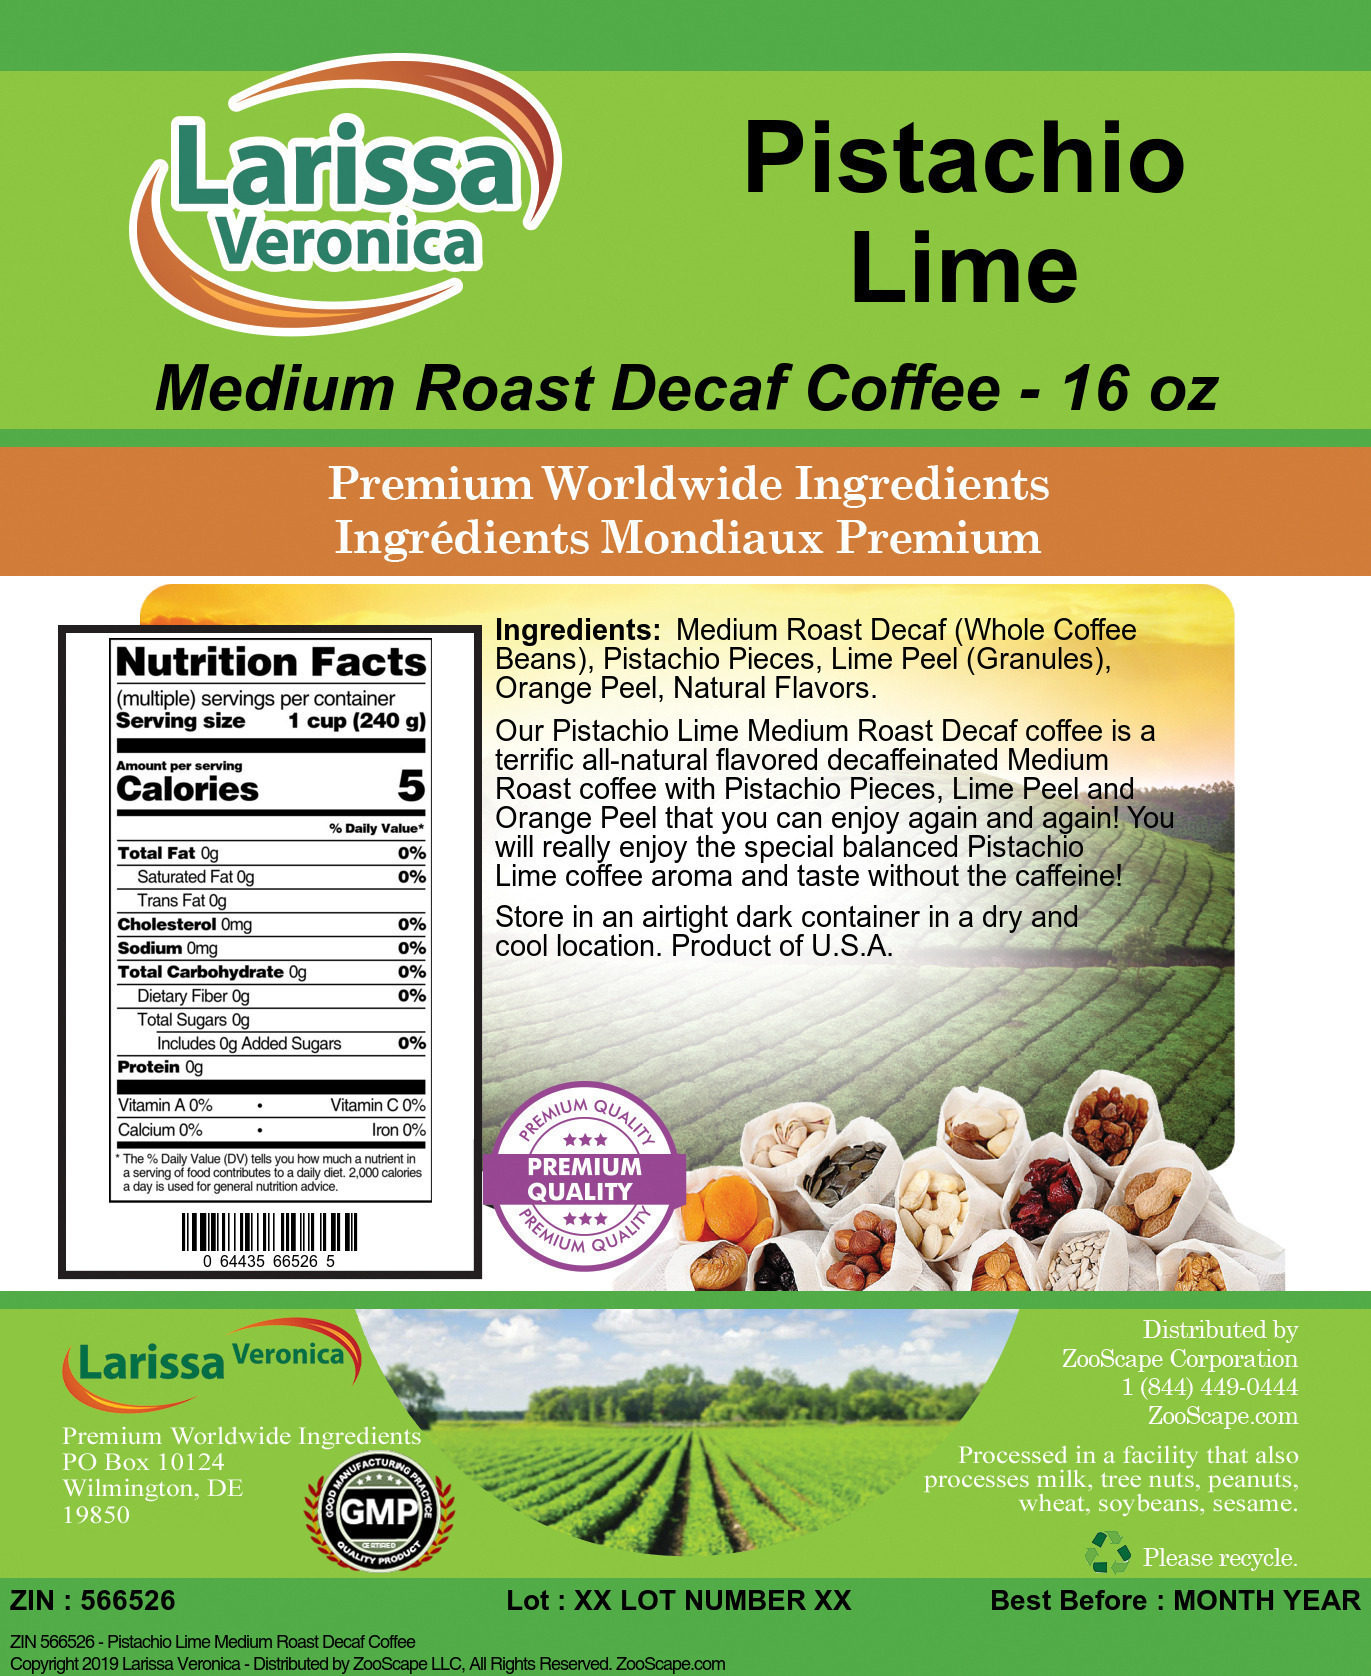 Pistachio Lime Medium Roast Decaf Coffee - Label